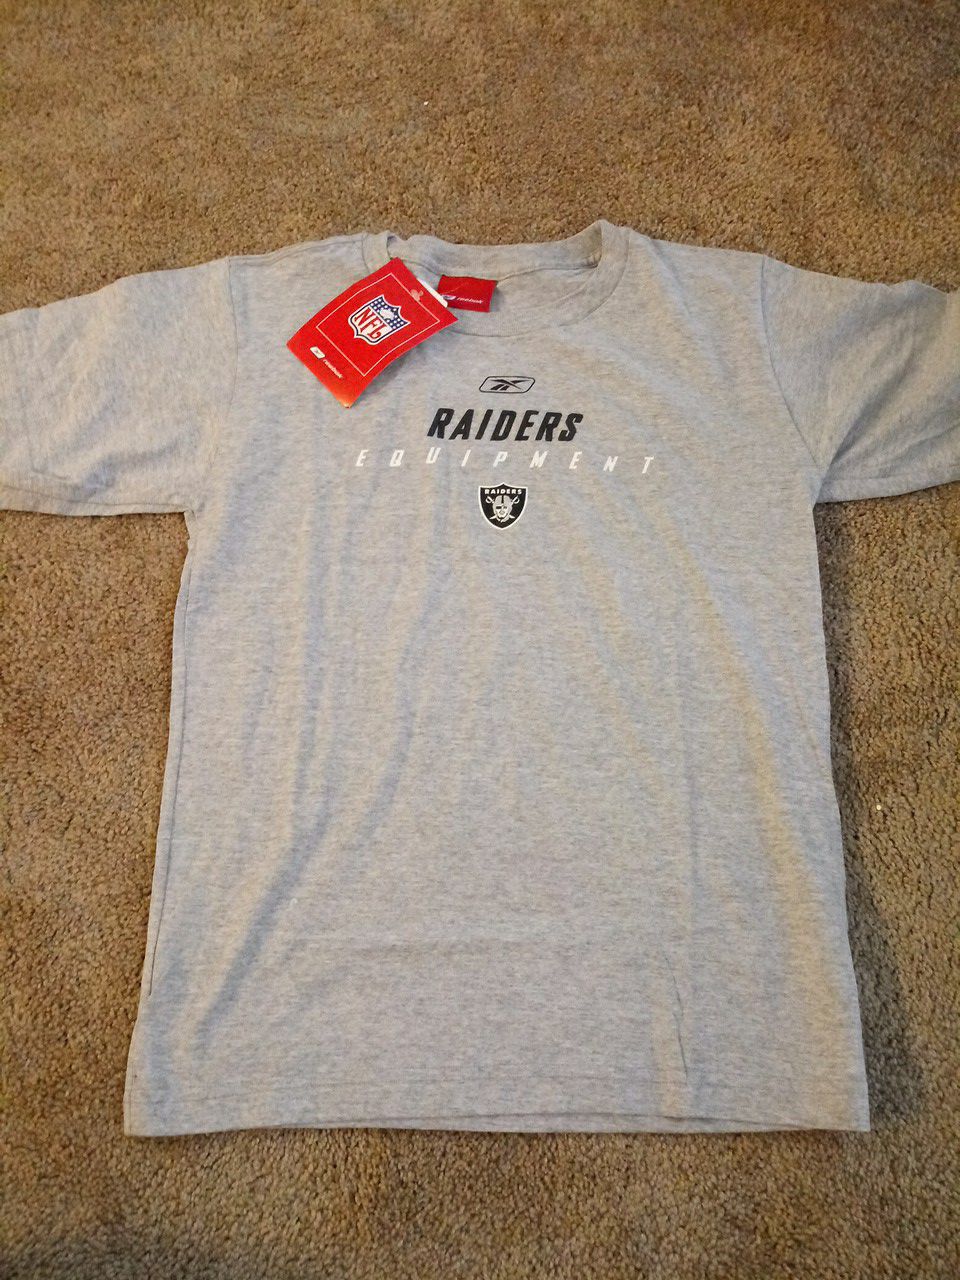 NFL Raider Reebok t-shirt